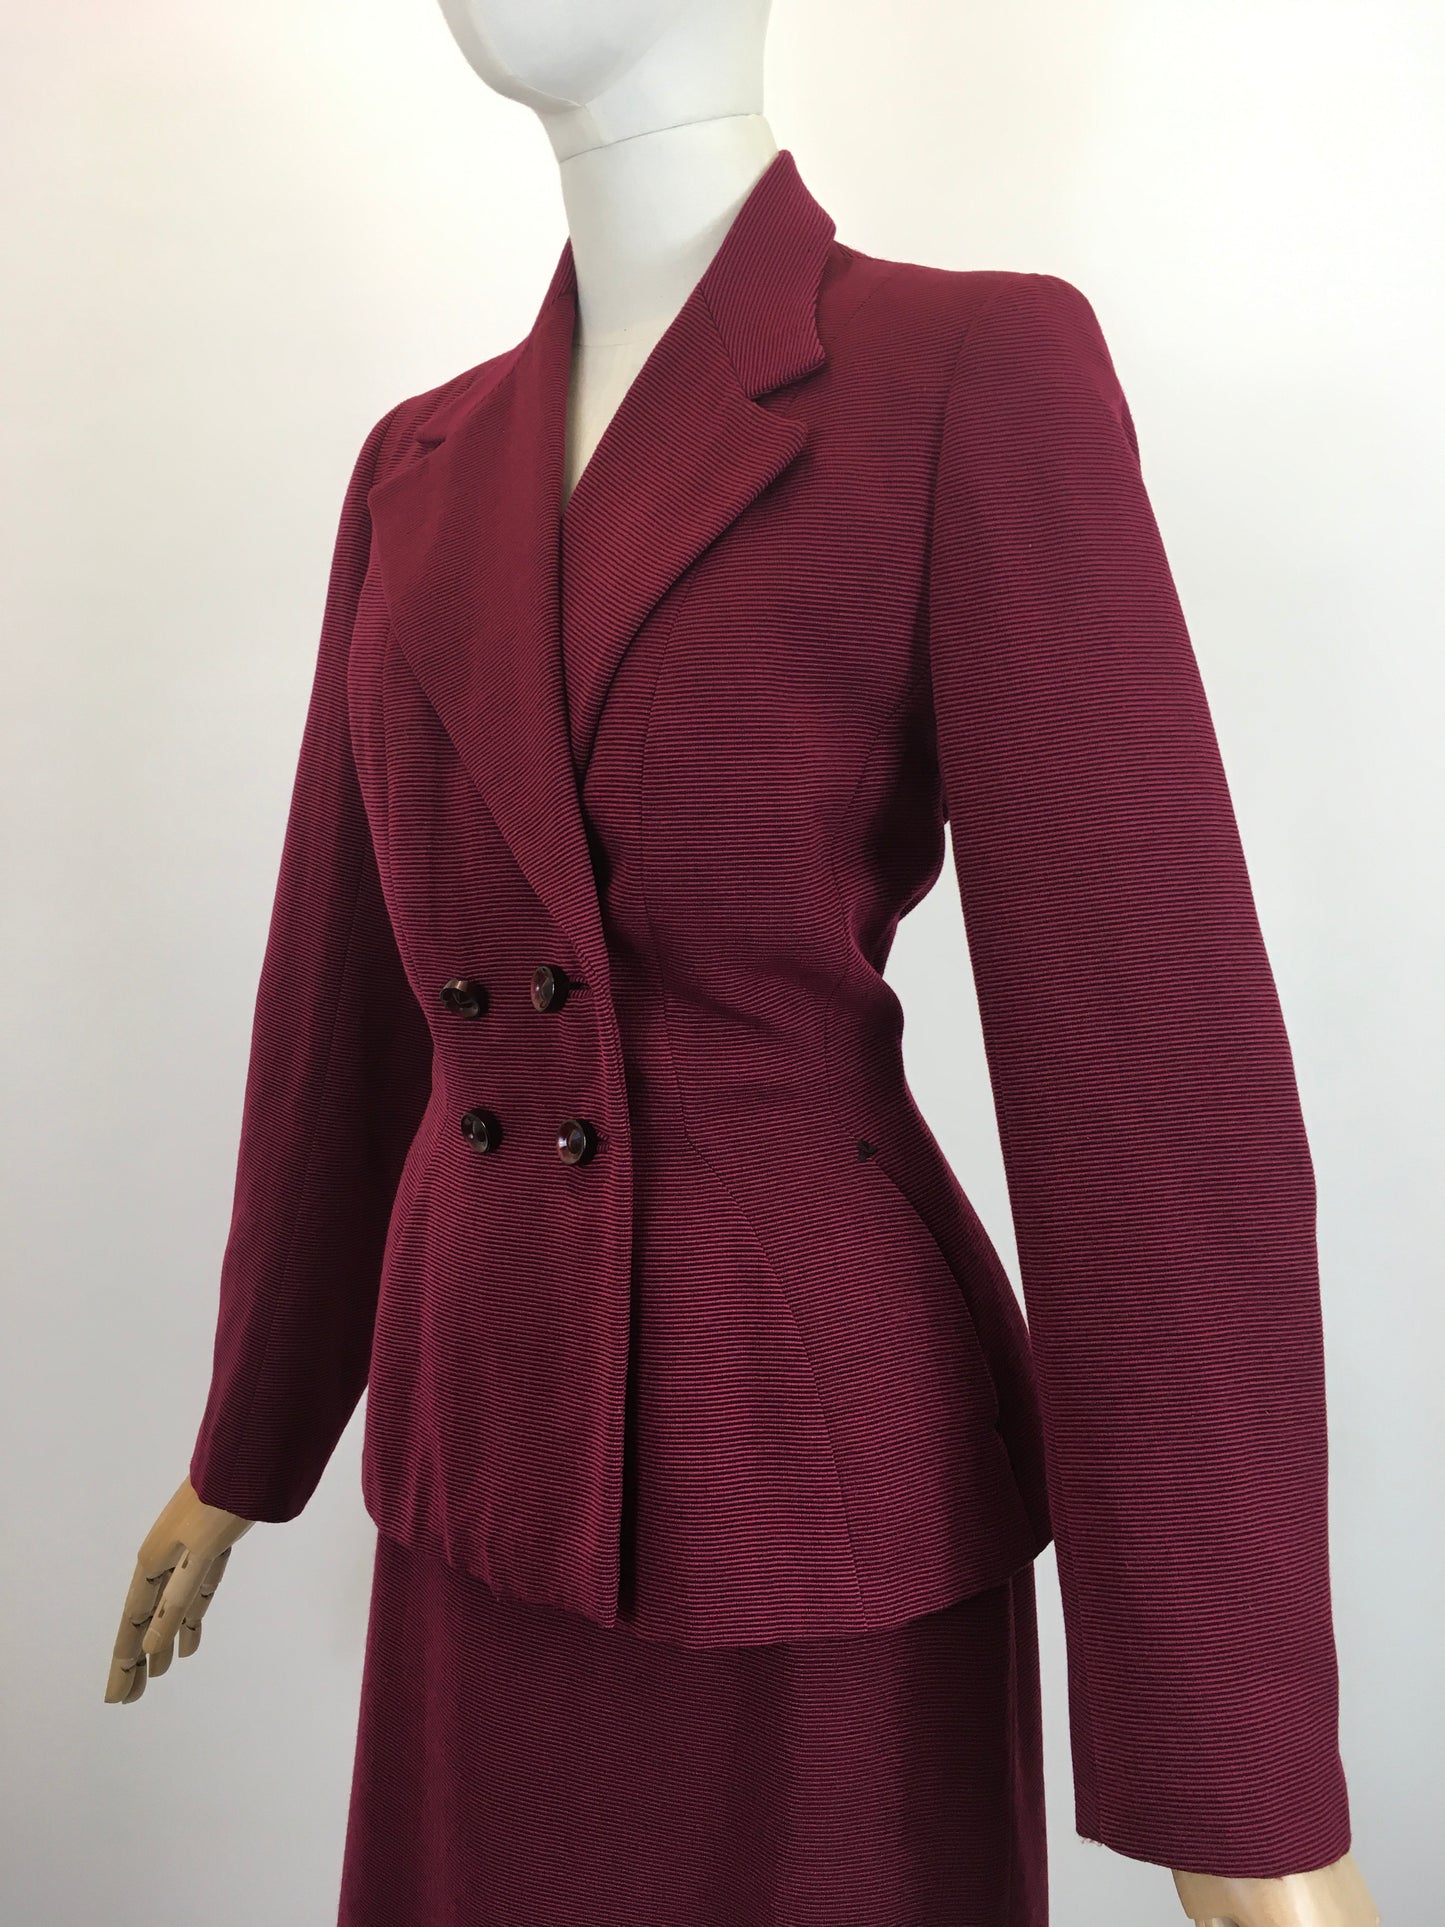 Original 1940's Darling 2pc Suit - In A Deep Berry Wine